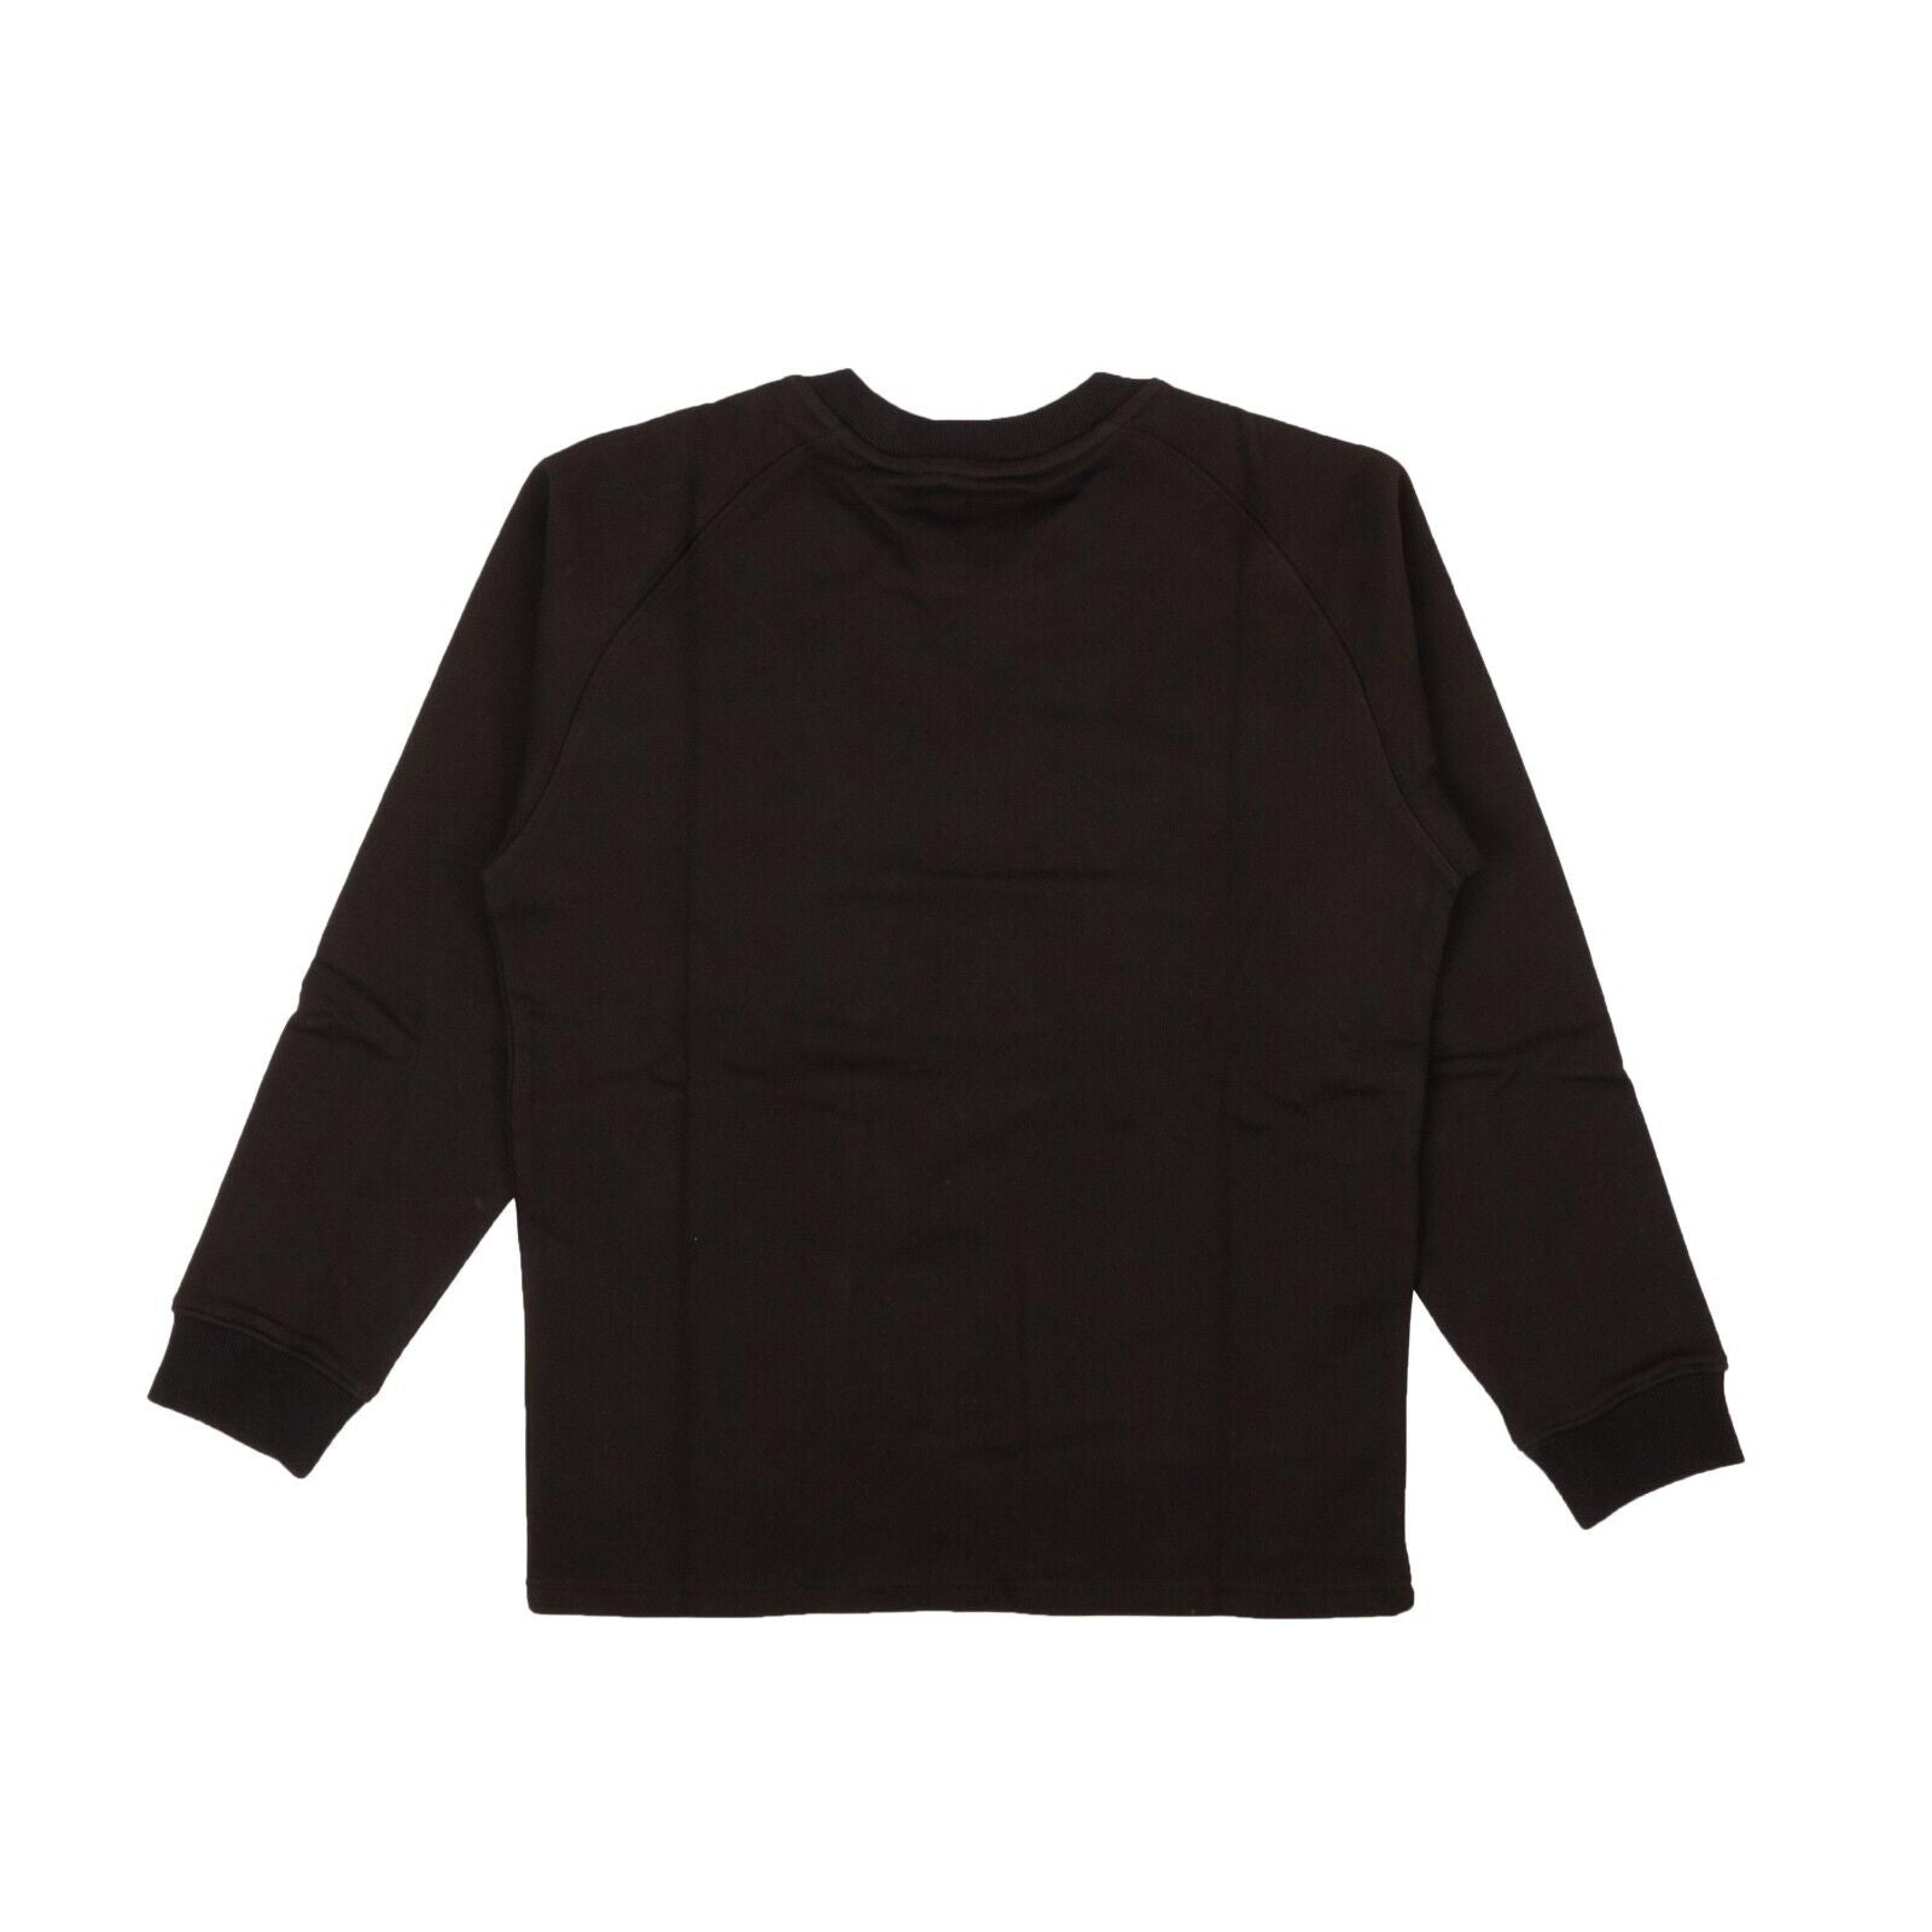 Alternate View 2 of Black Cotton Blank Raglan Sweatshirt